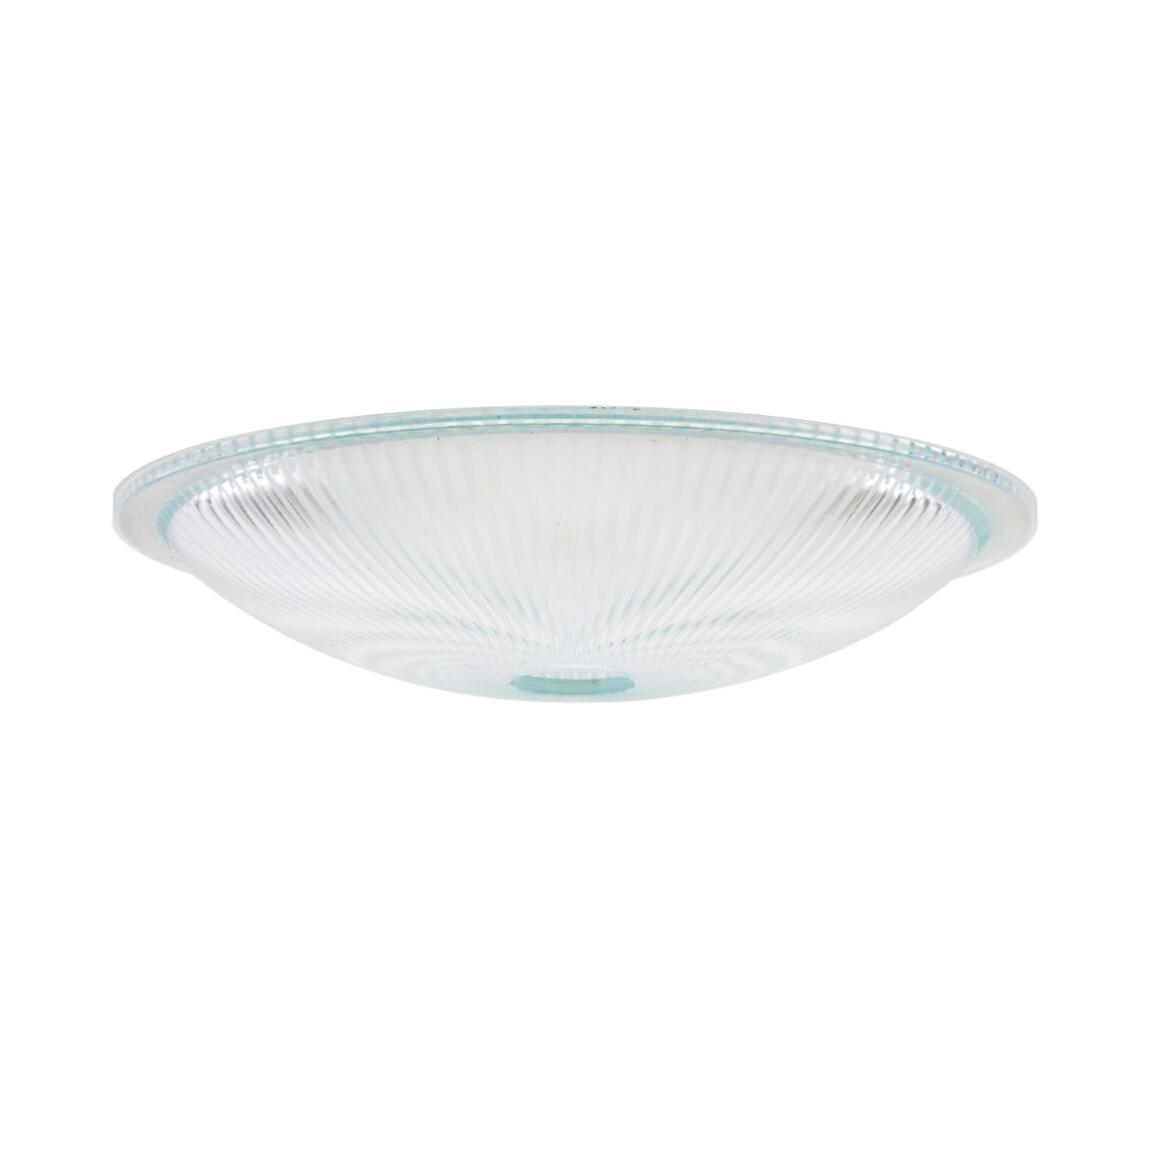 Holophane dish glass lamp shade main product image